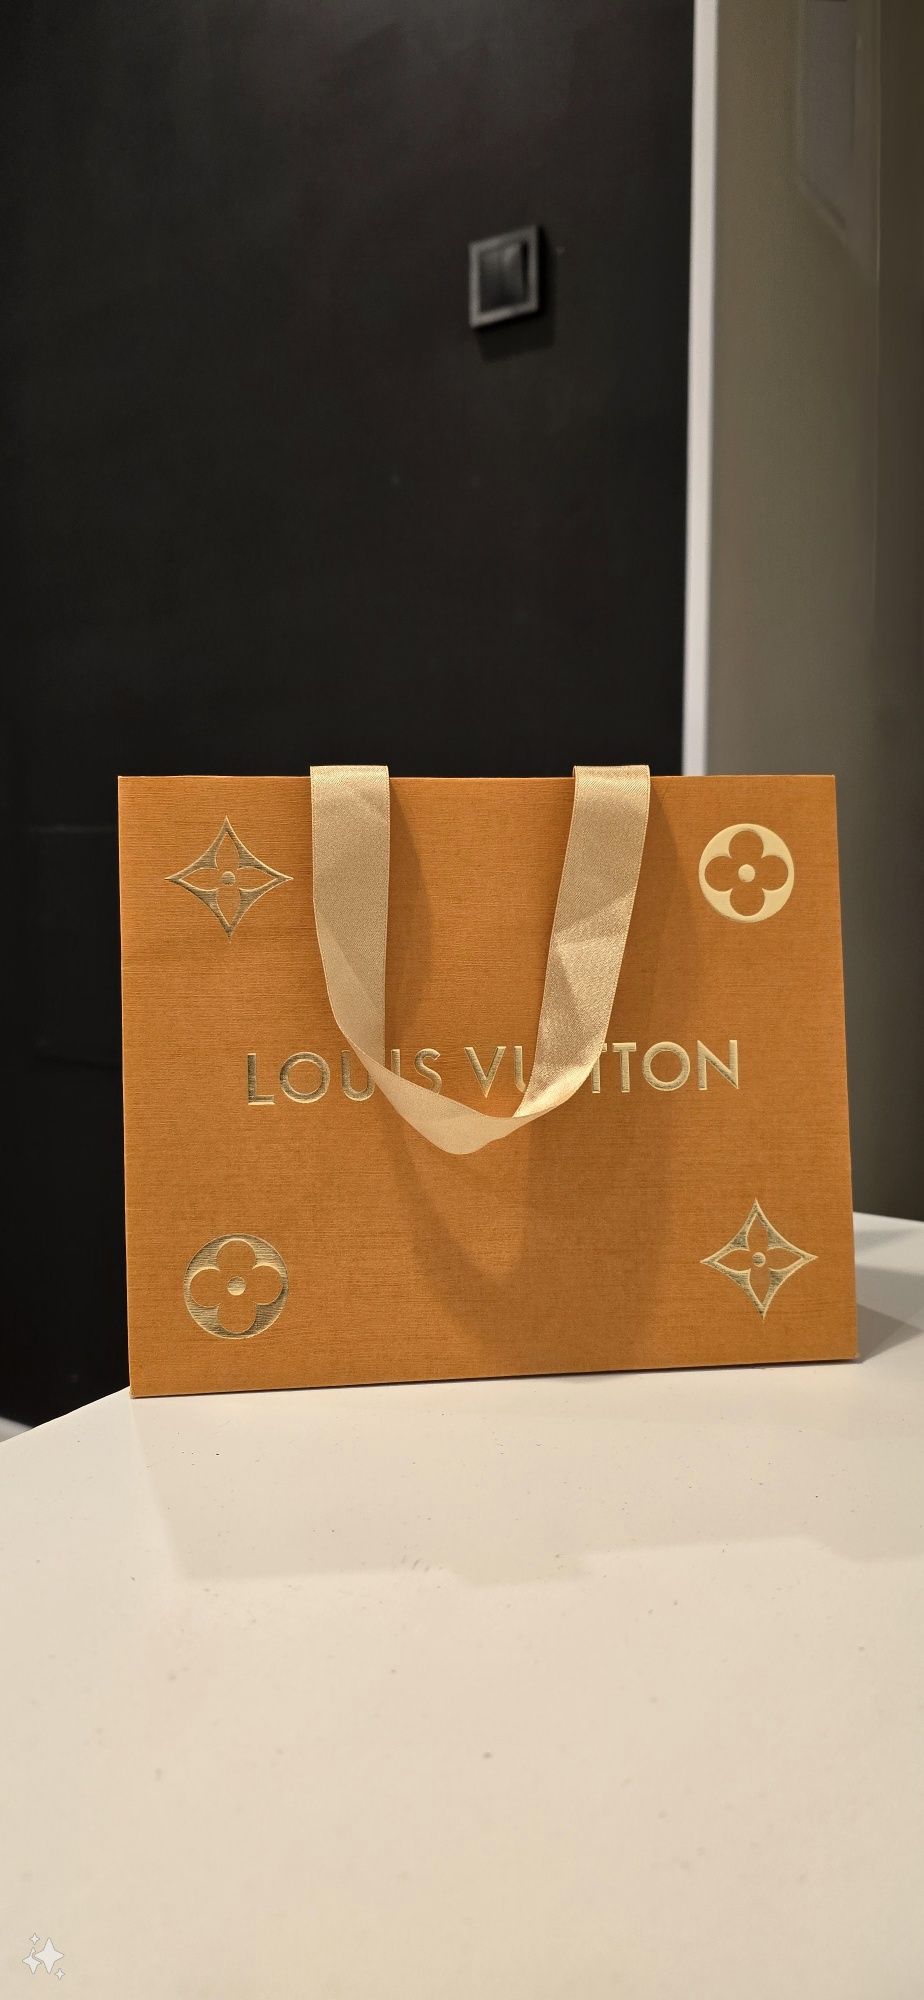 Torebka prezentowa Louis Vuitton wersja limitowana